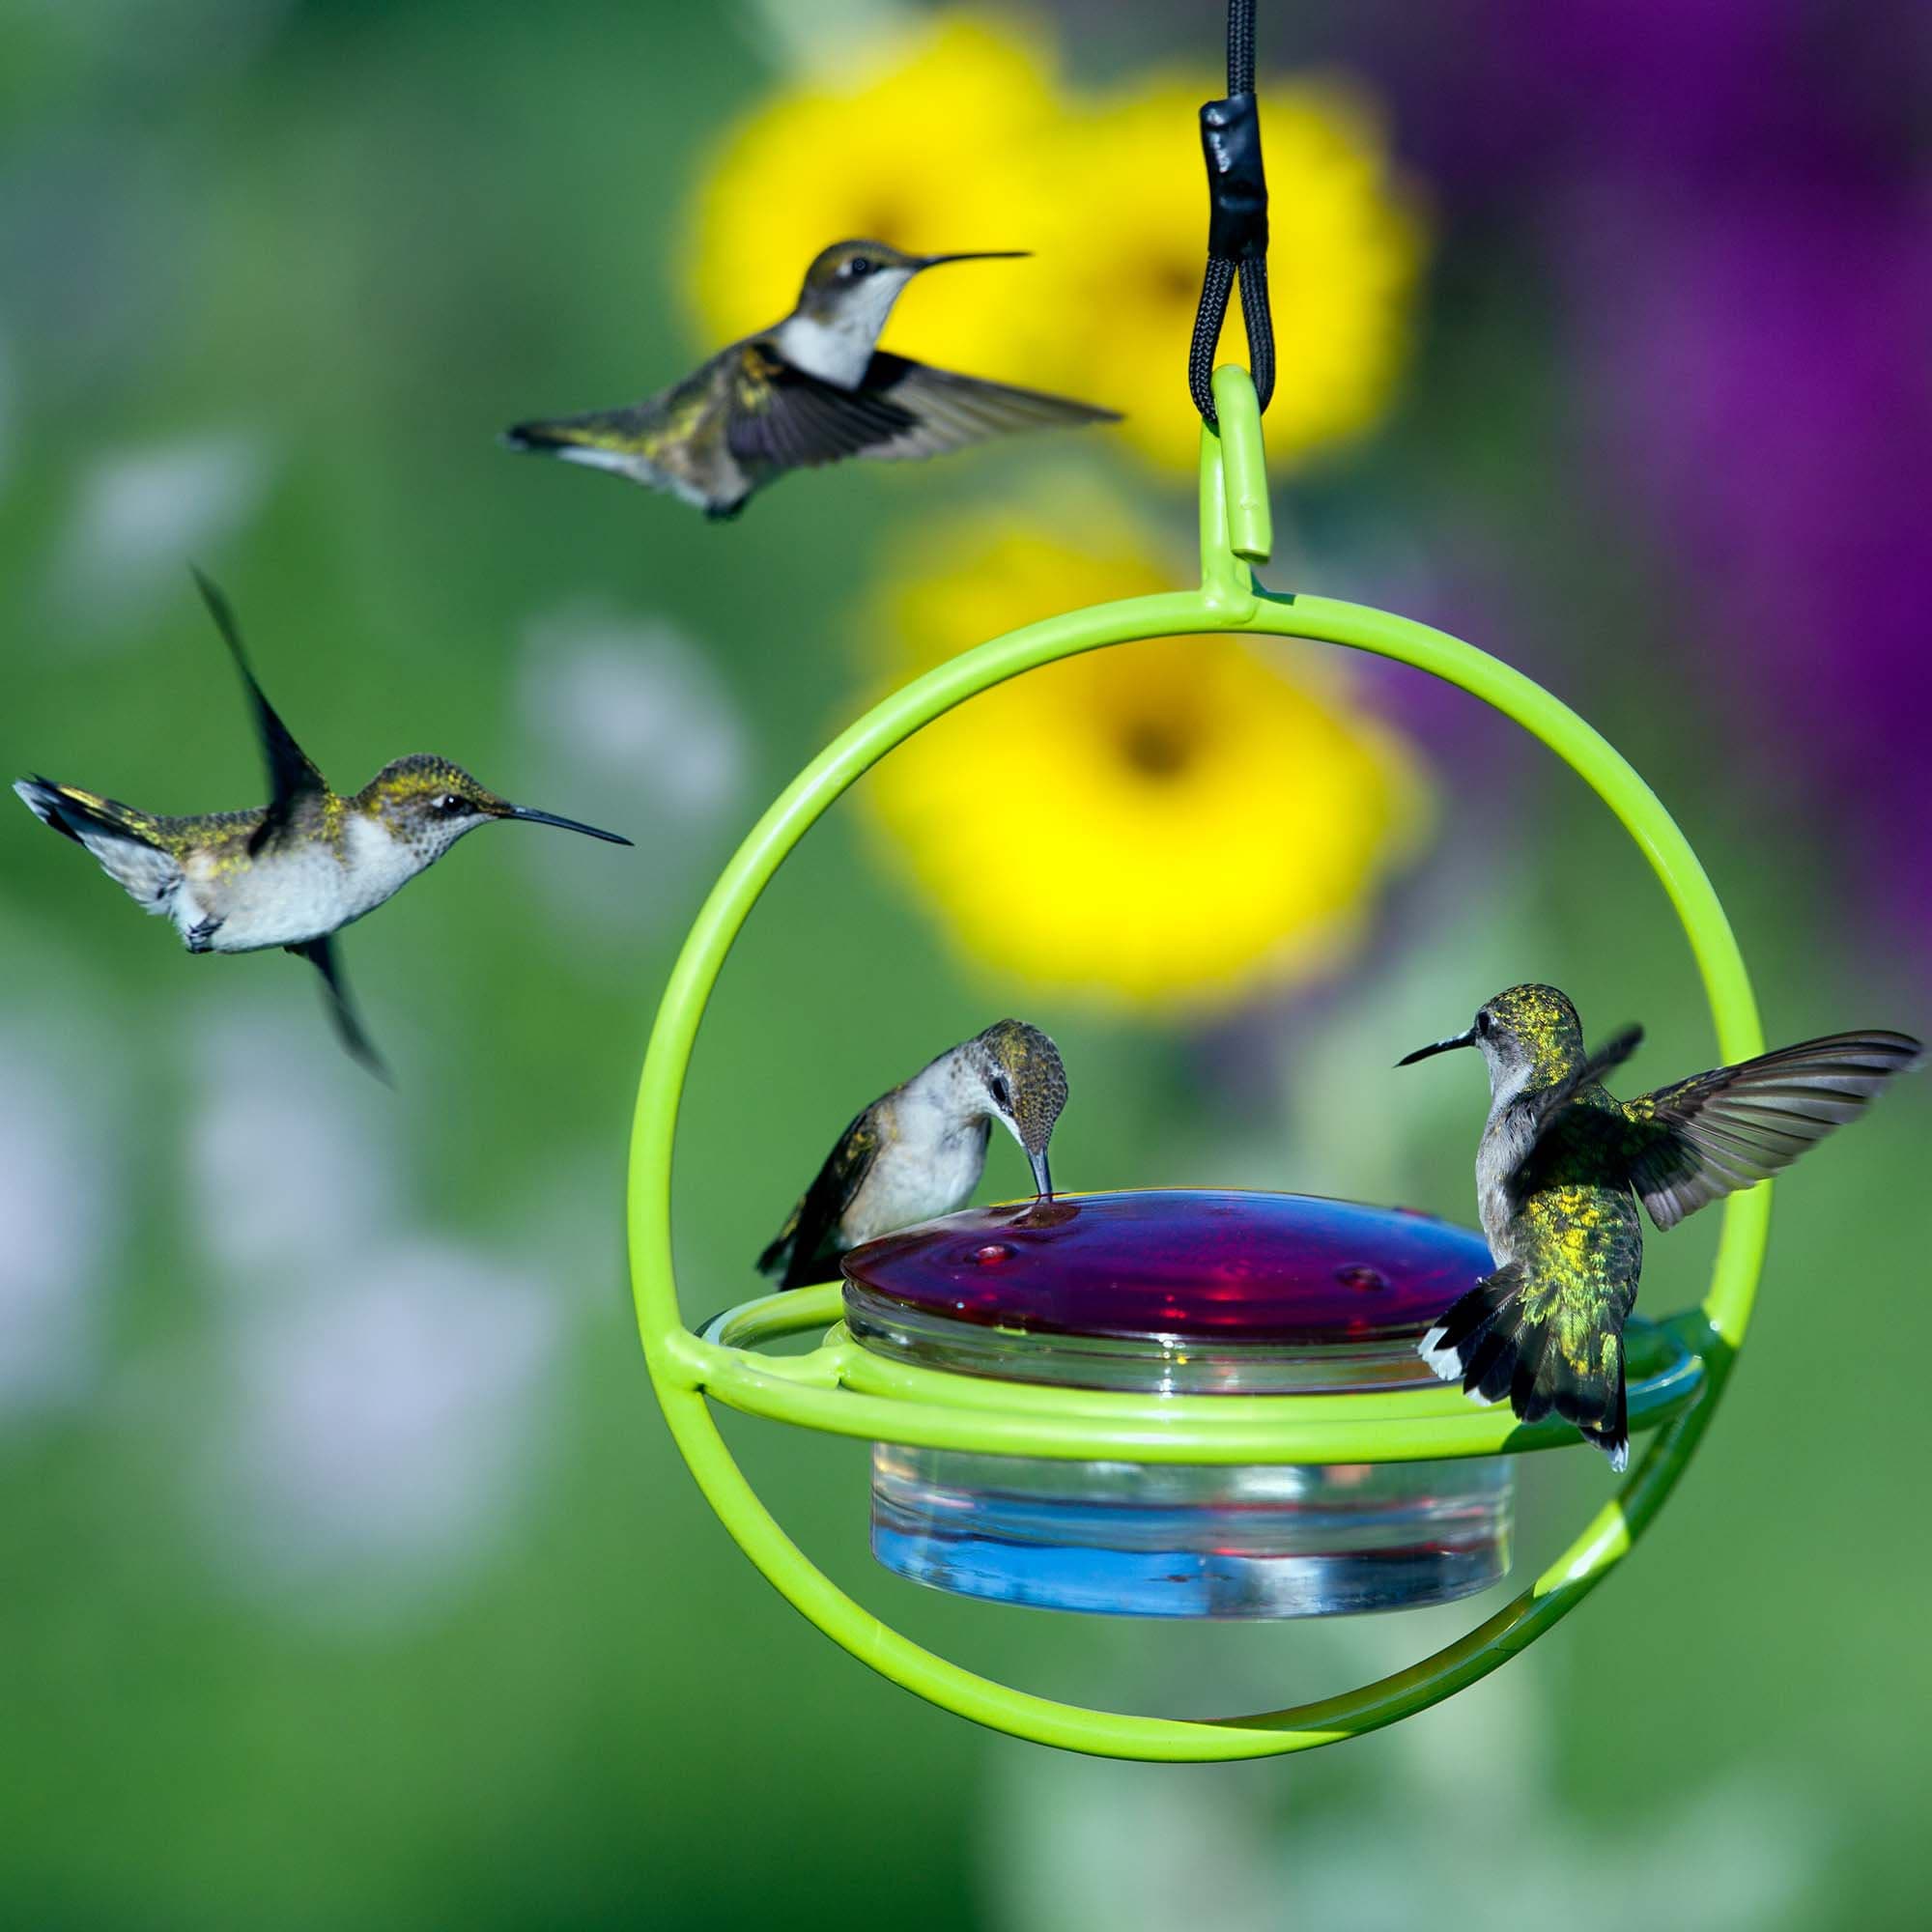 Linkable Metal and Glass Hummingbird Feeder